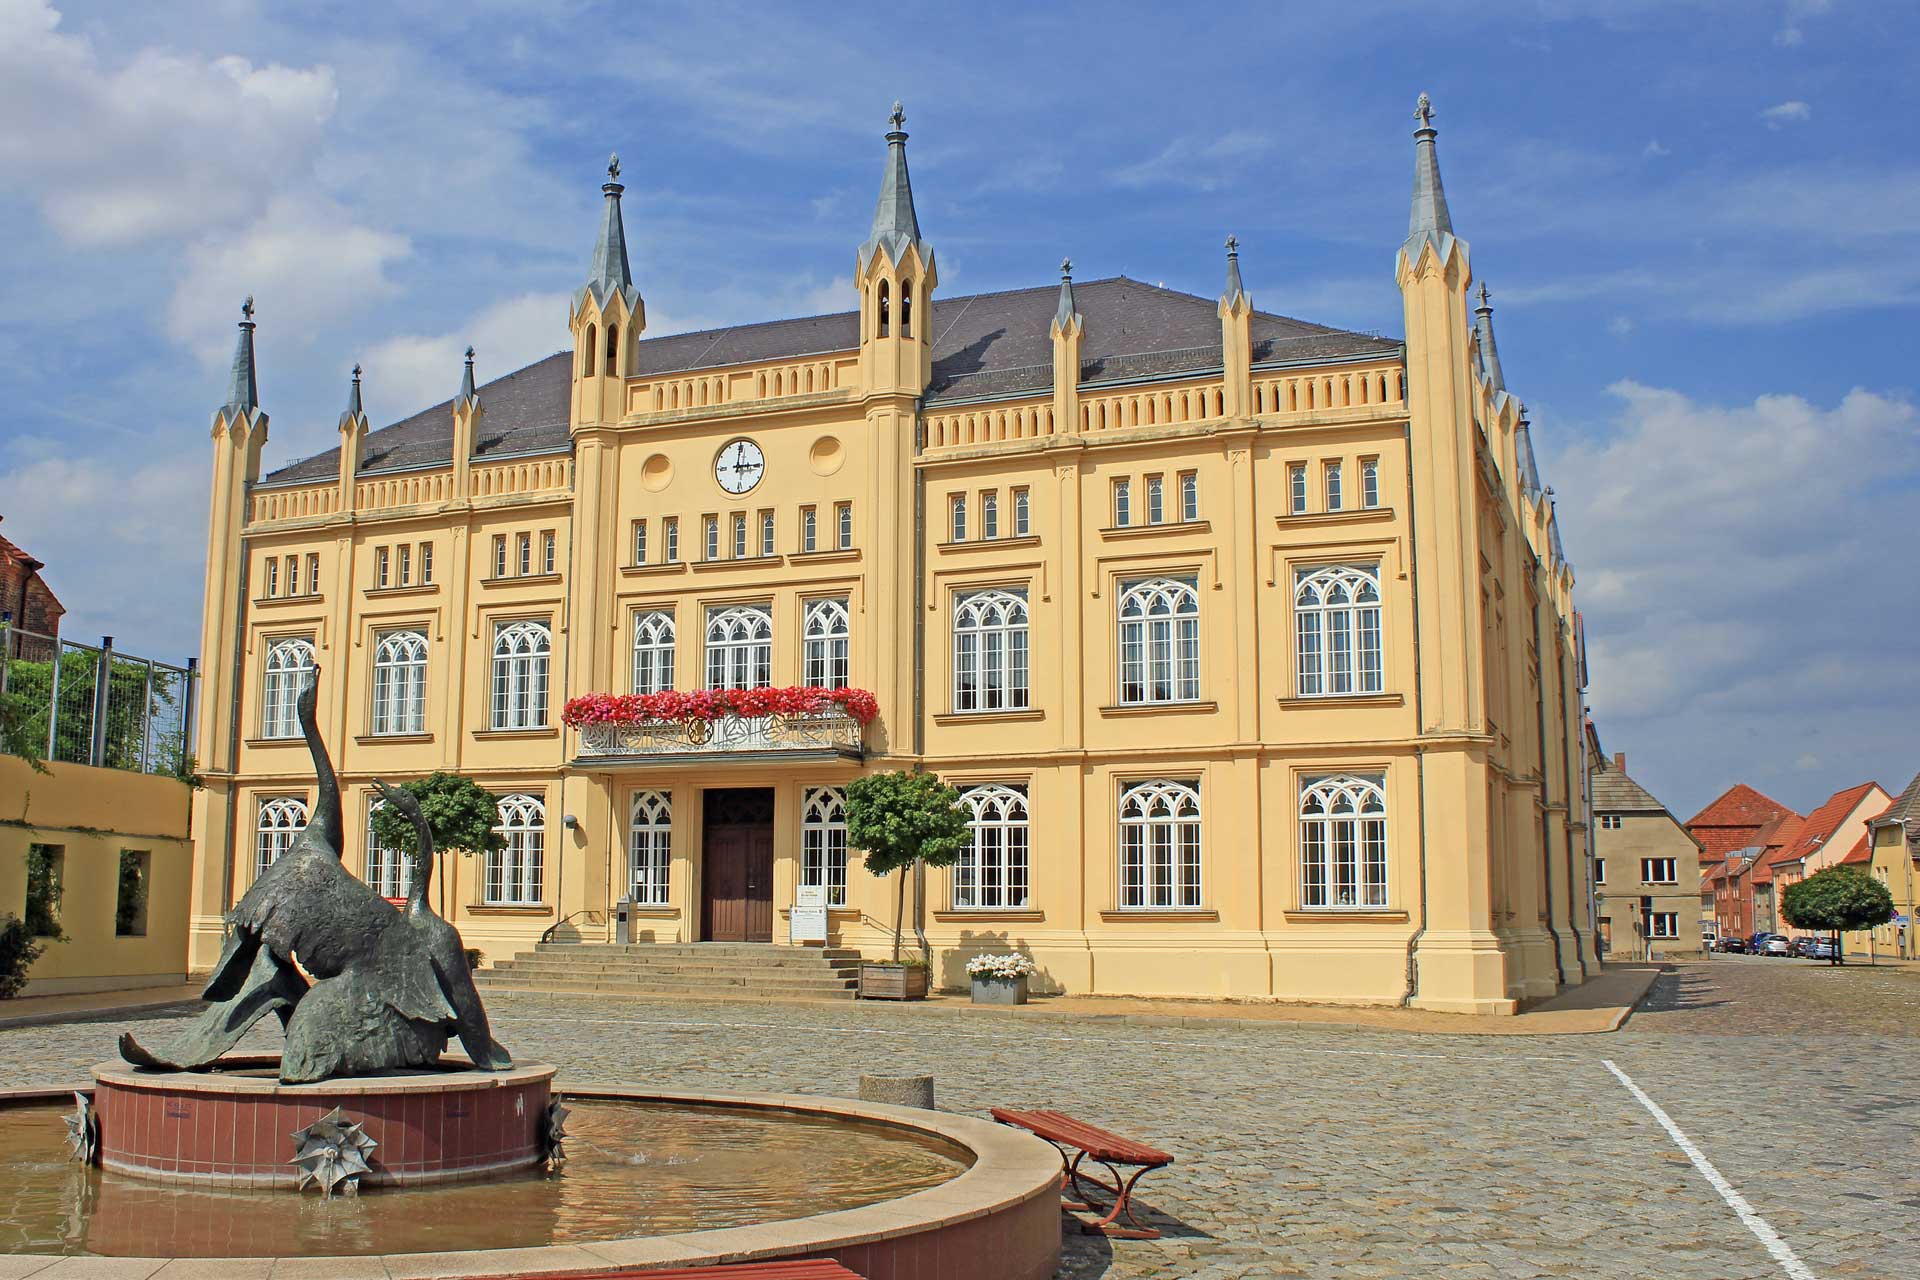 Gänsebrunnen vor Rathaus in Bützow